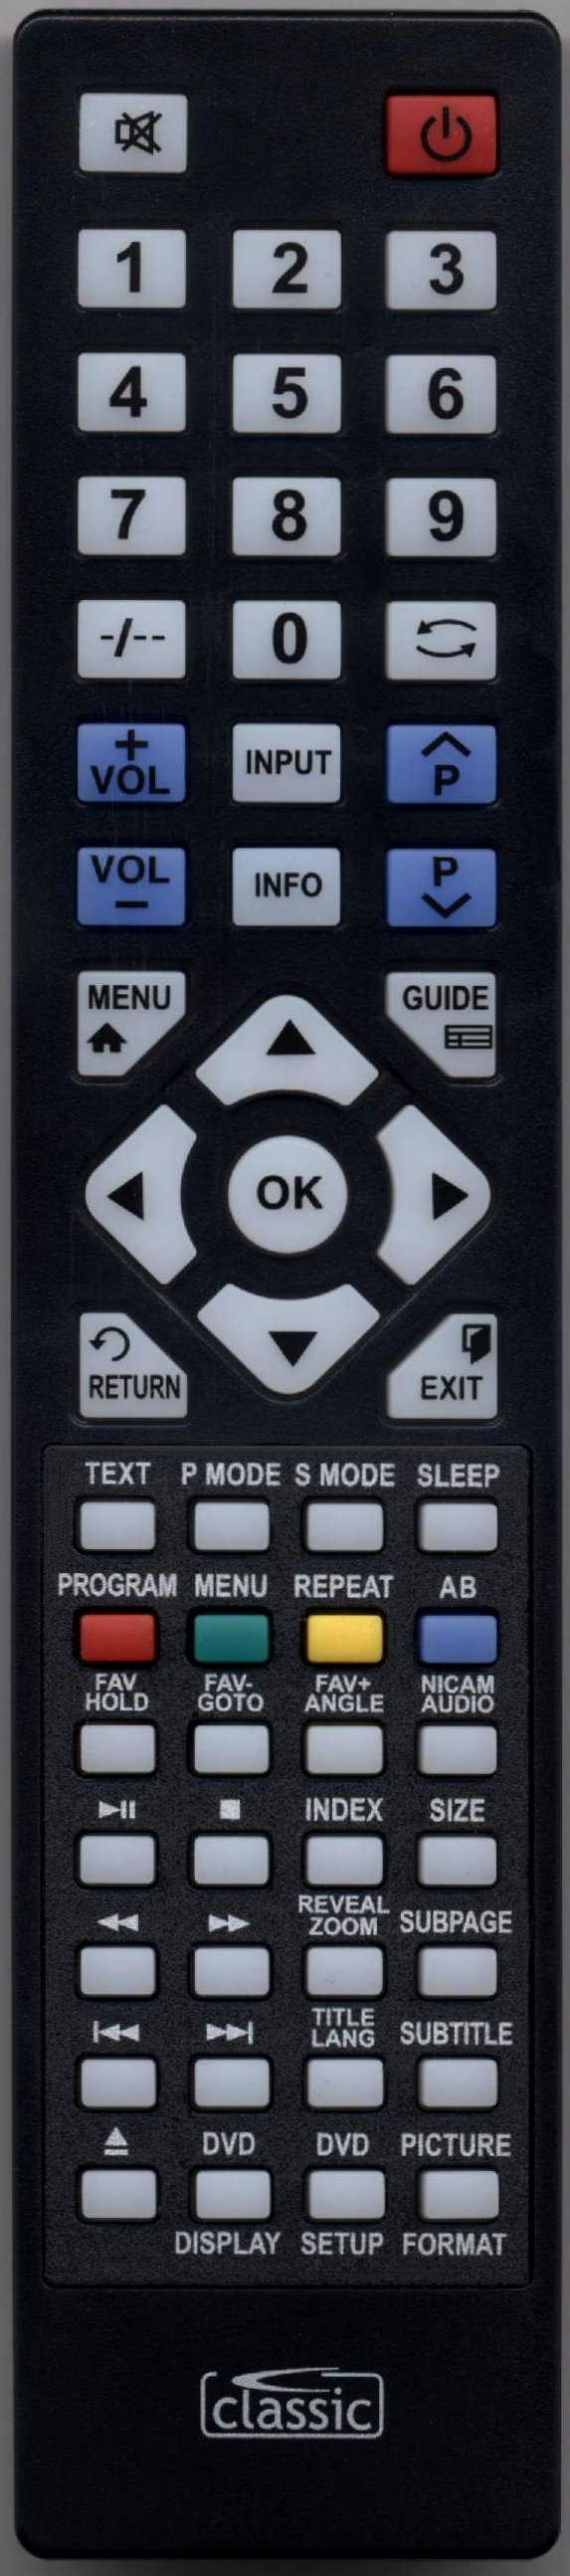 UMC X19/16B Remote Control